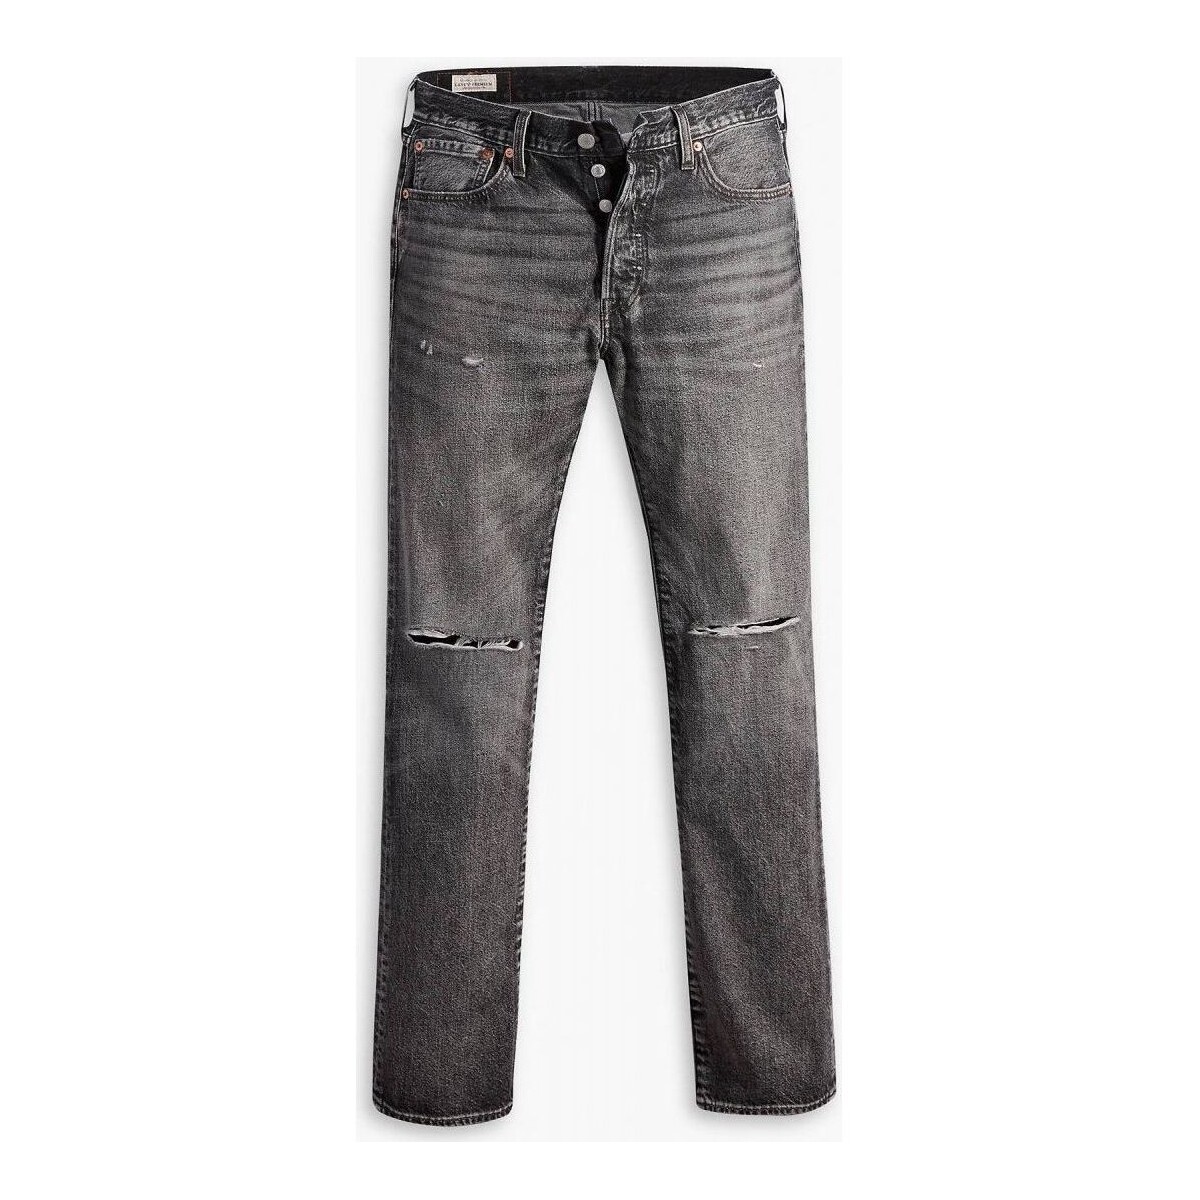 Abbigliamento Uomo Jeans Levi's 00501 3414 - 501 ORIGINAL-BLACK SAND BEACH DX Nero